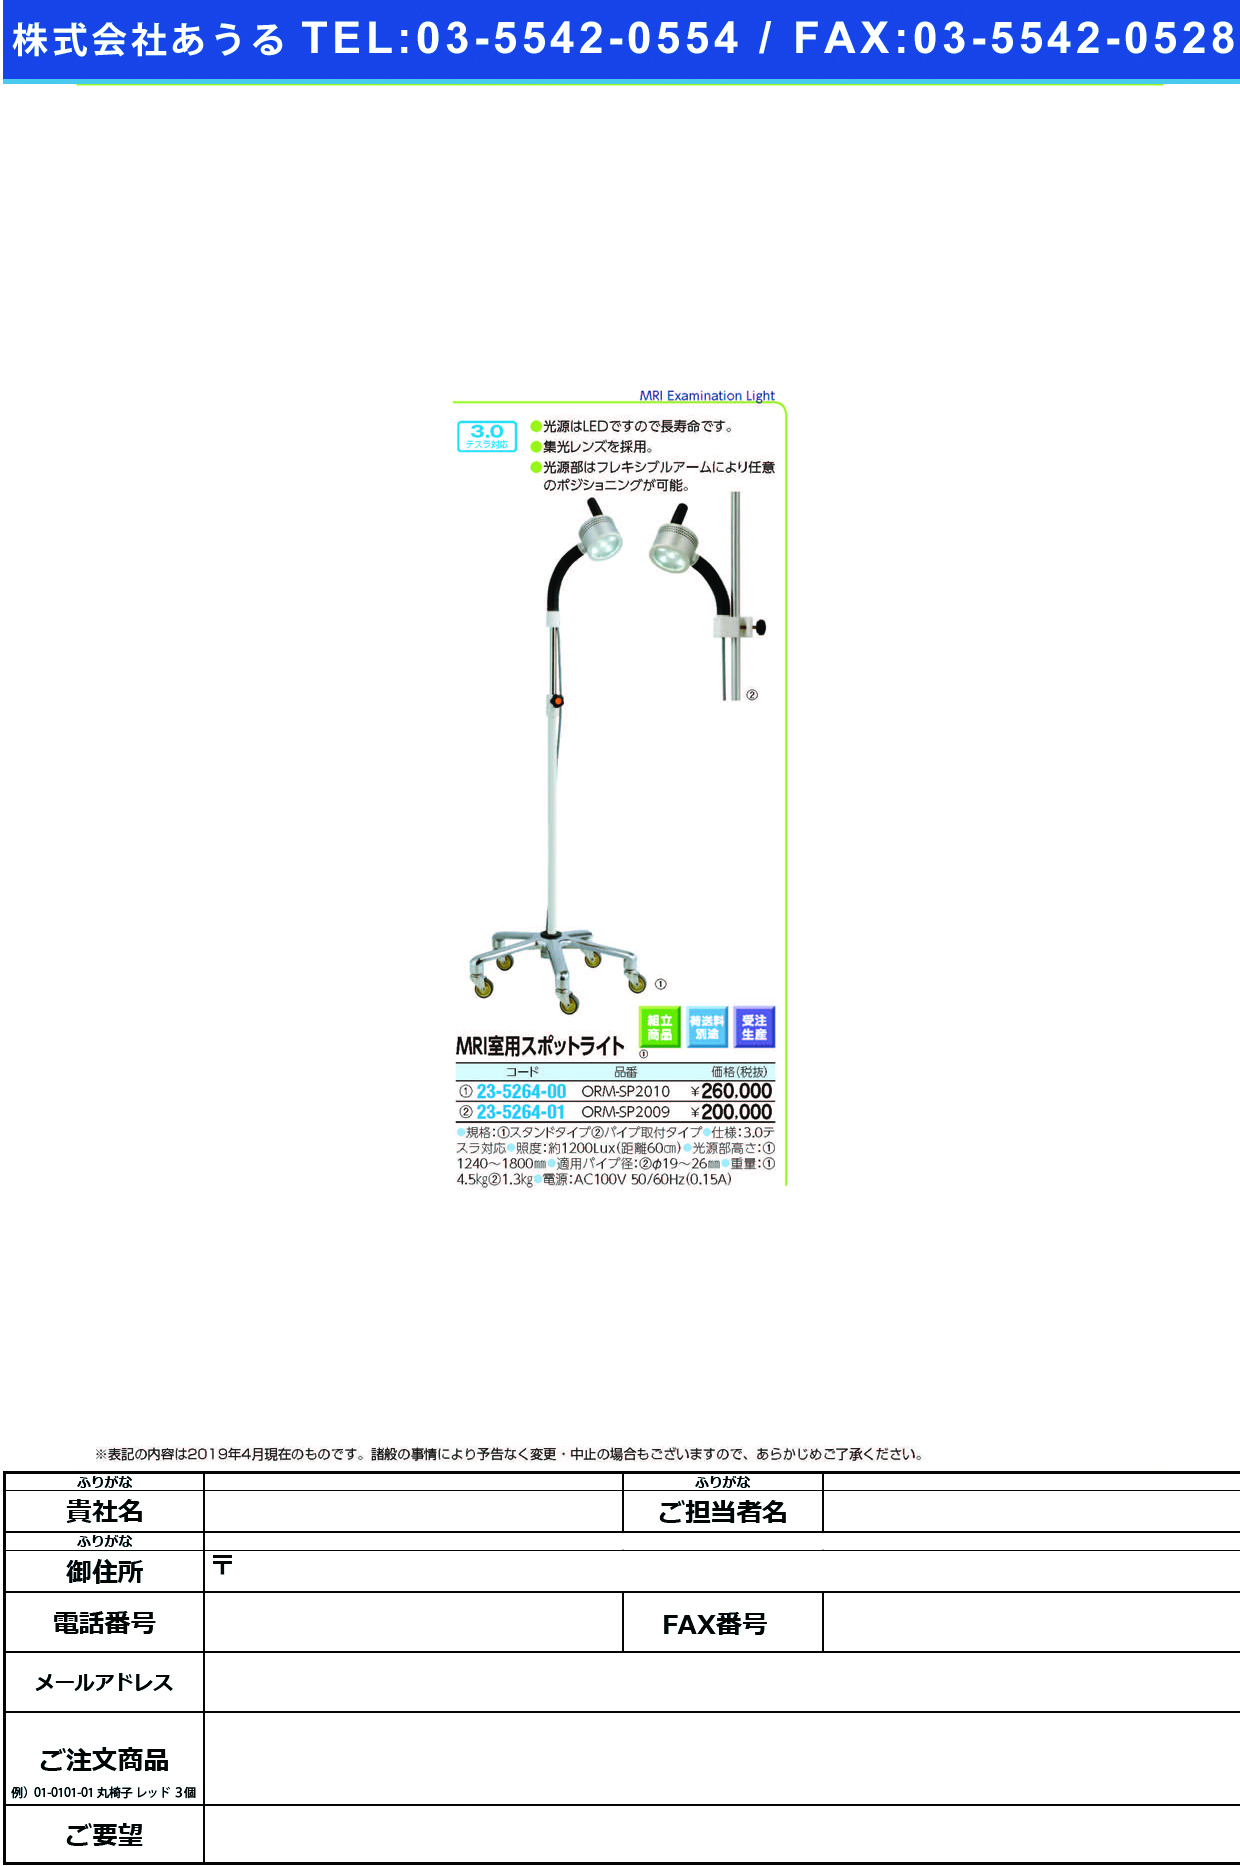 (23-5264-00)ＭＲＩ室用スポットライト ORM-SP2010(ｽﾀﾝﾄﾞﾀｲﾌﾟ MRIｼﾂﾖｳｽﾎﾟｯﾄﾗｲﾄ【1台単位】【2019年カタログ商品】